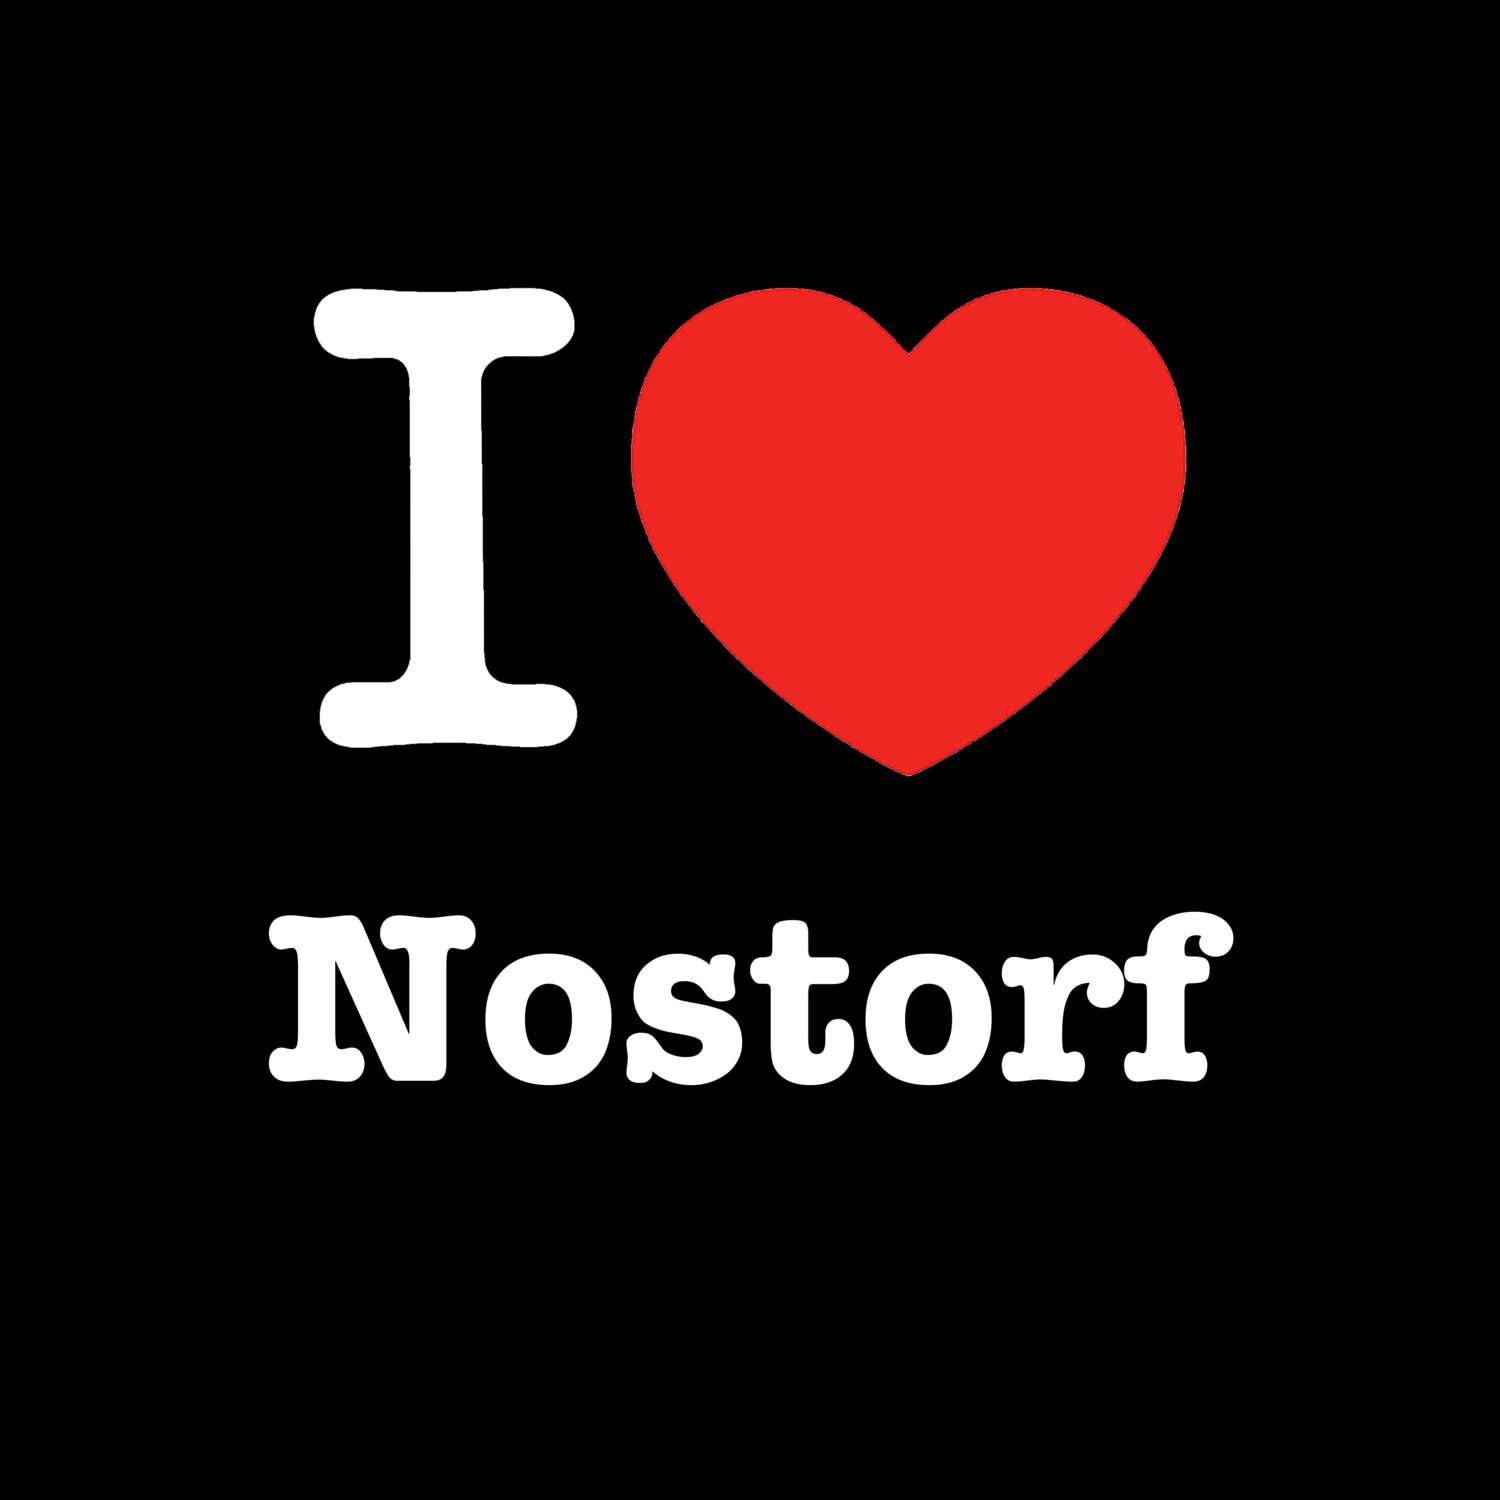 Nostorf T-Shirt »I love«